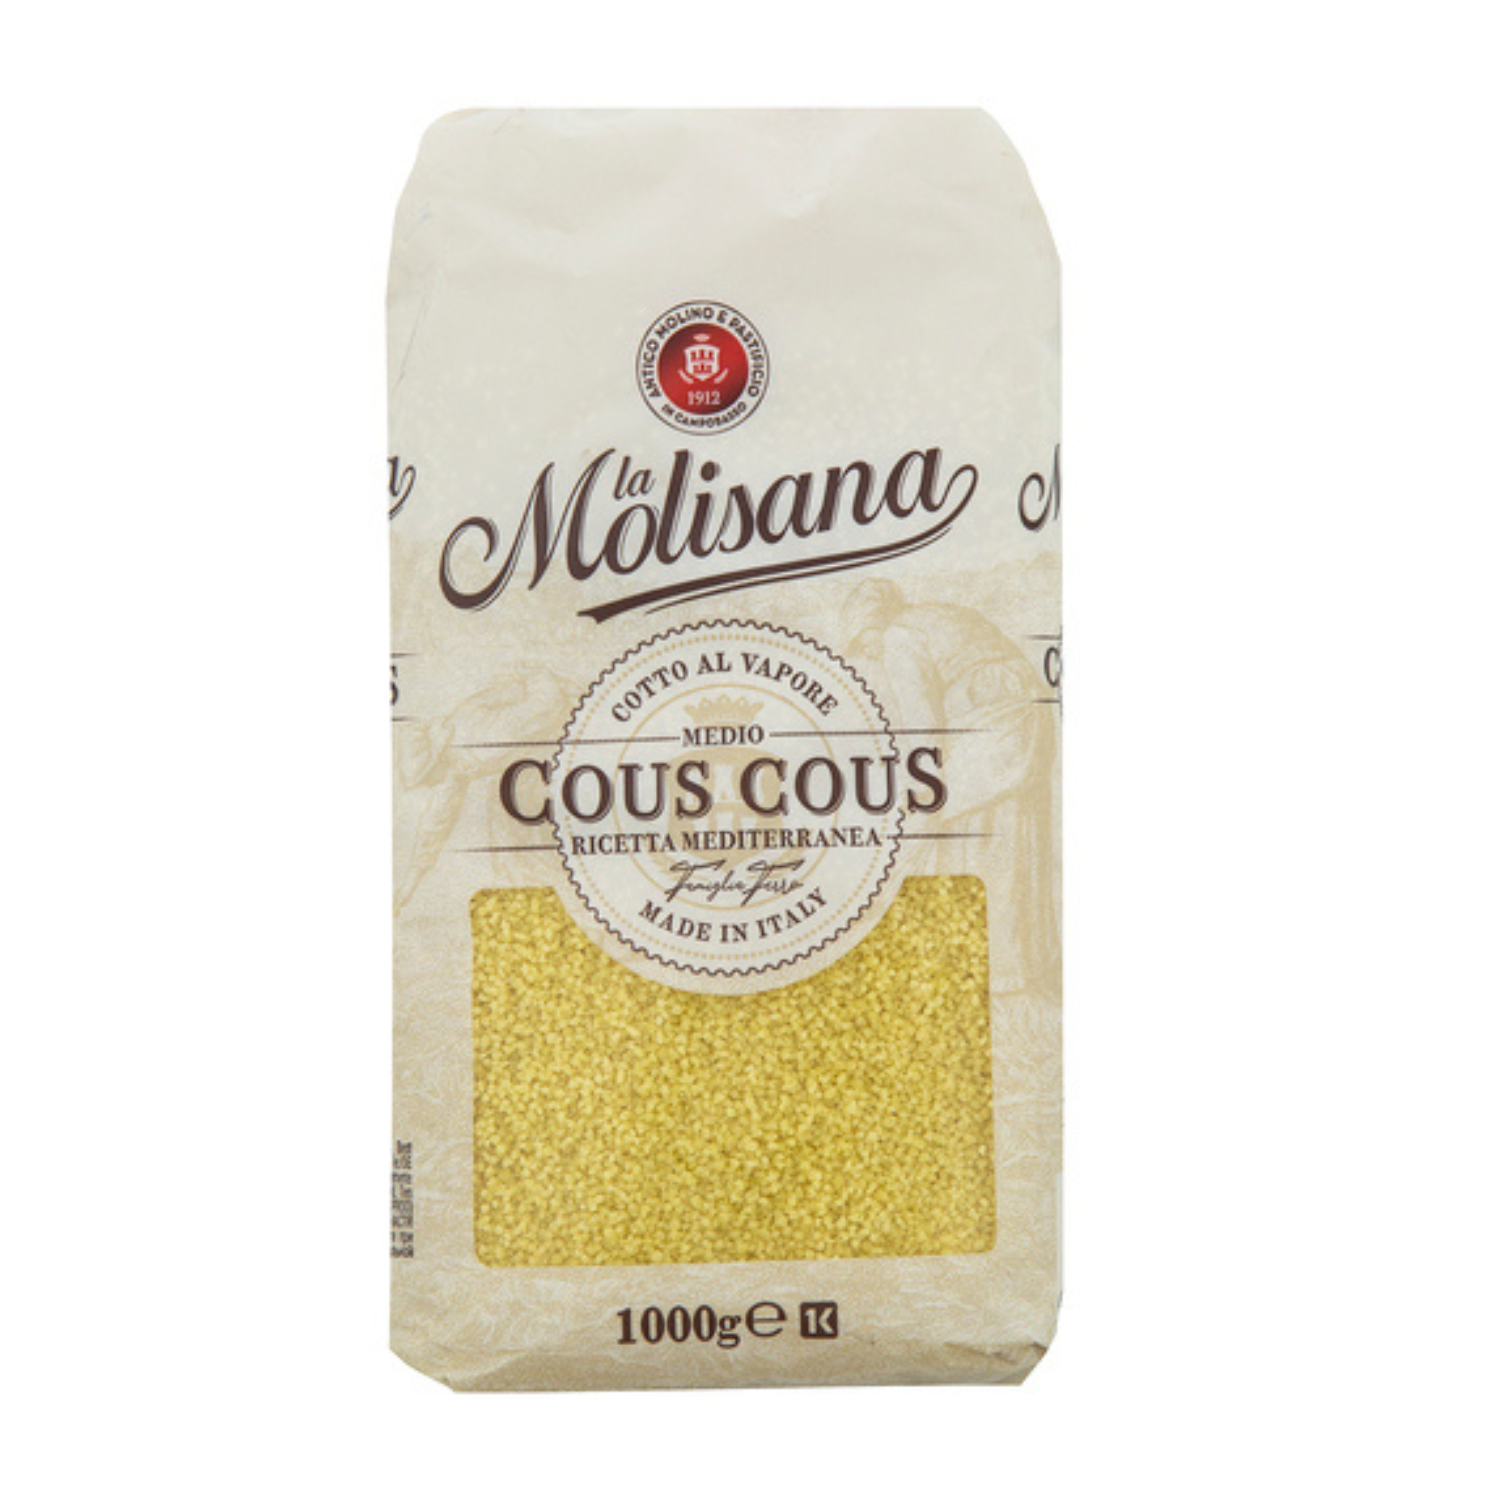 Cous Cous No621, 1000 g, La Molisana